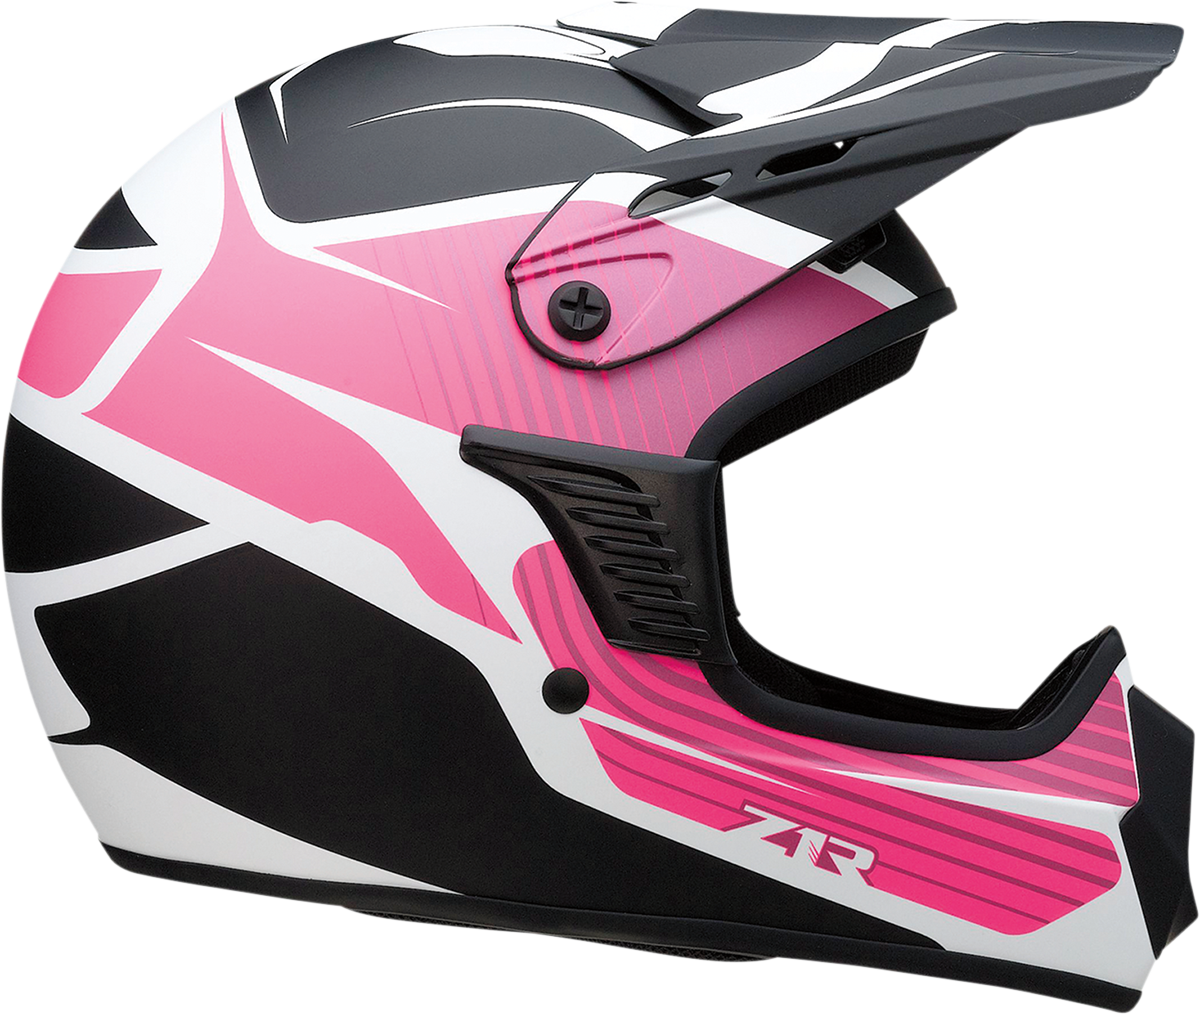 Z1R Child Rise Helmet - Flame - Pink - L/XL 0111-1438